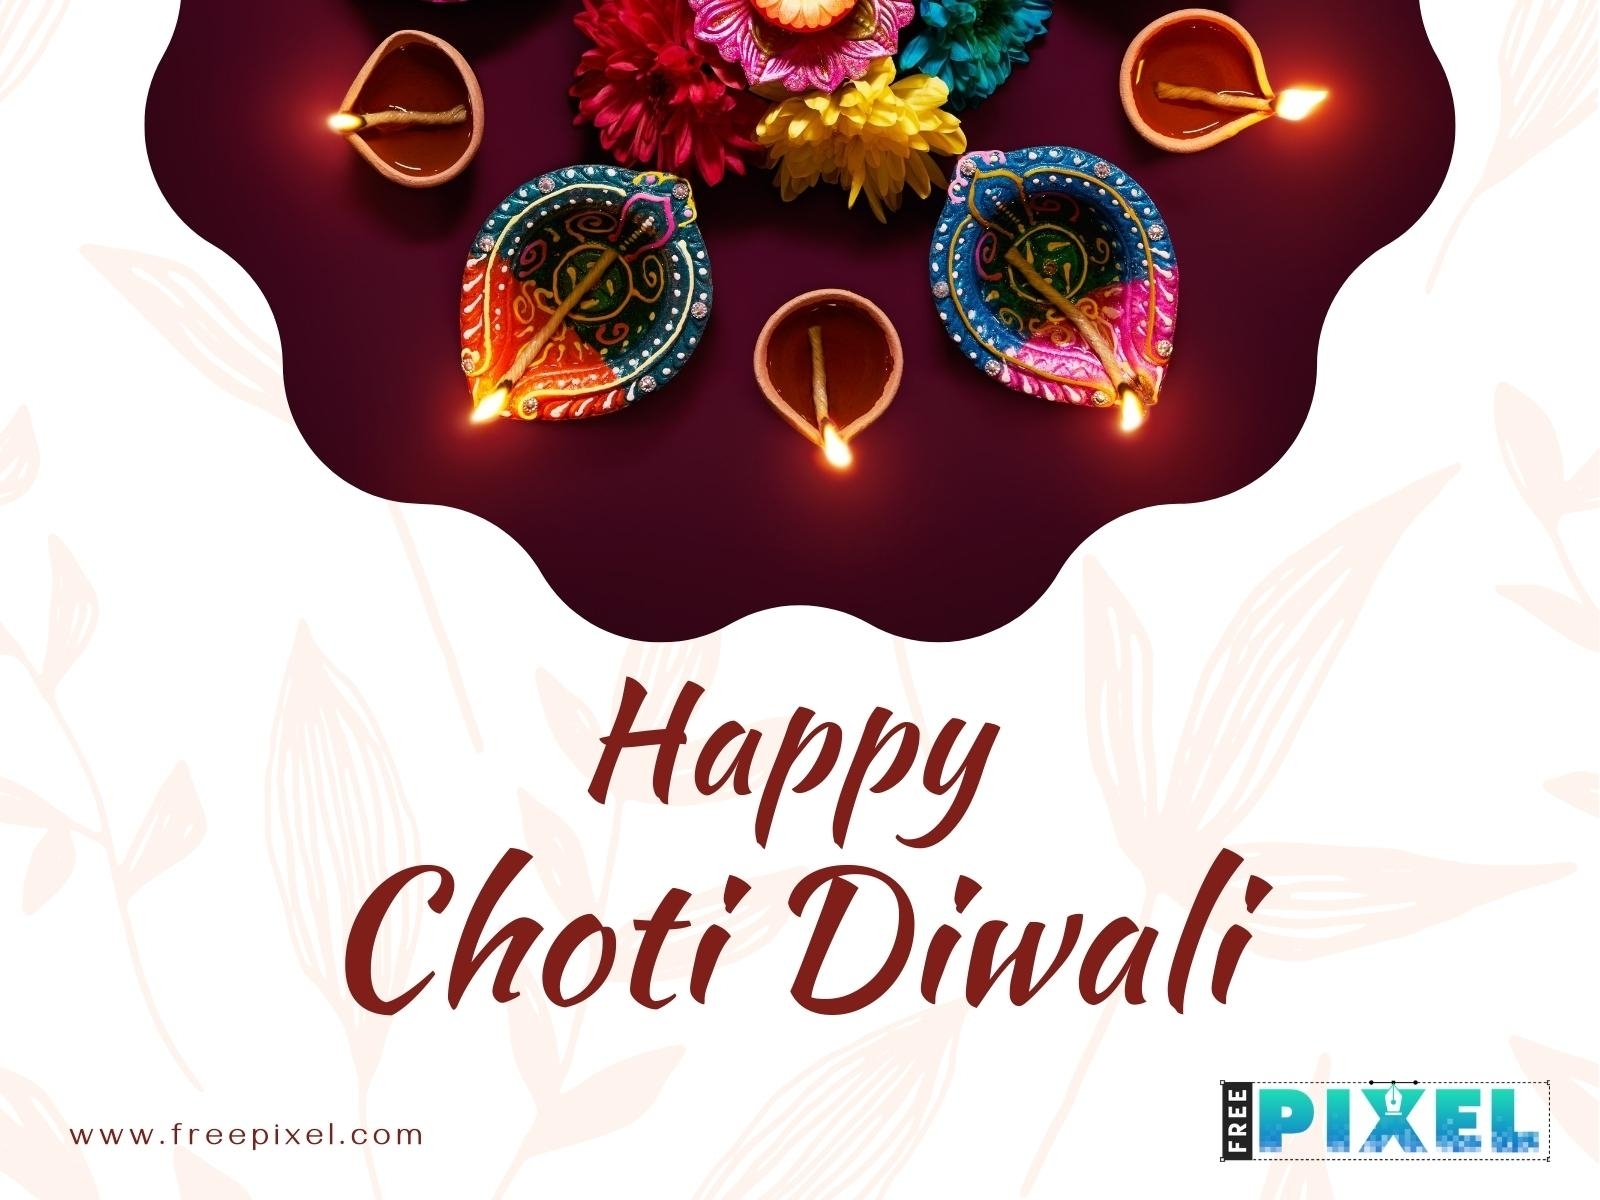 Happy Choti Diwali by FreePixel on Dribbble